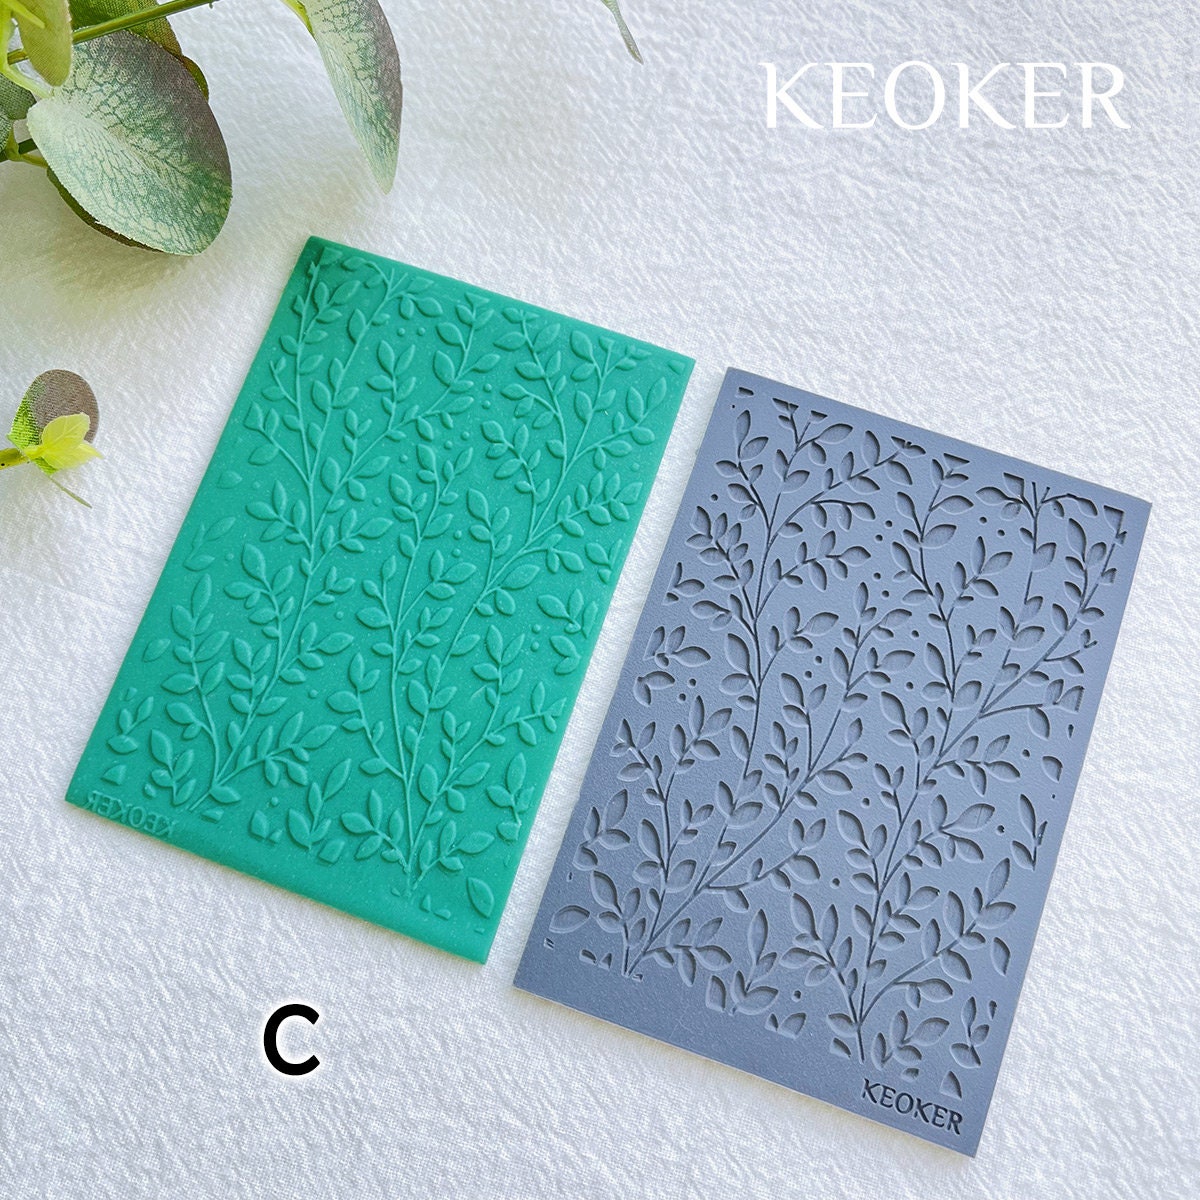  Keoker Polymer Clay Texture Sheets, Clay Texture Mat